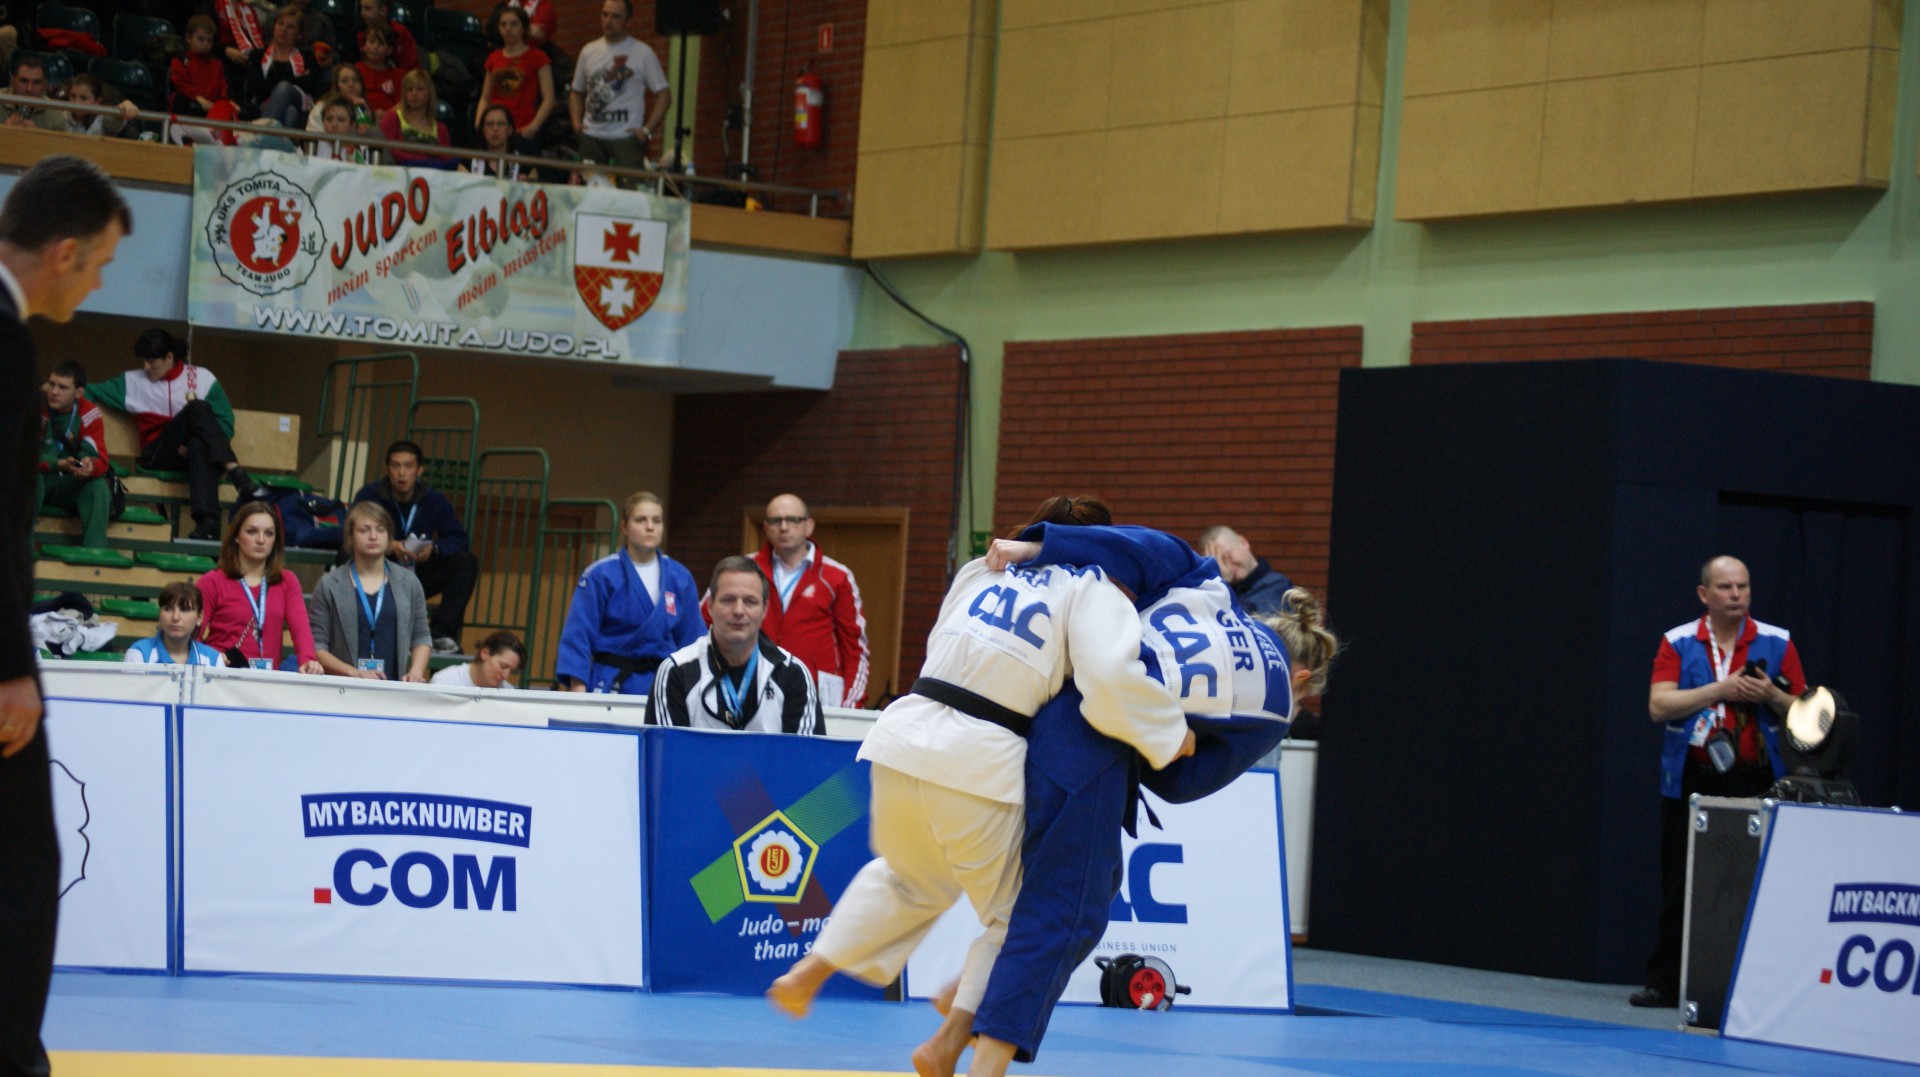 Puchar Swiata Judo Warszawa 2012 (507).JPG